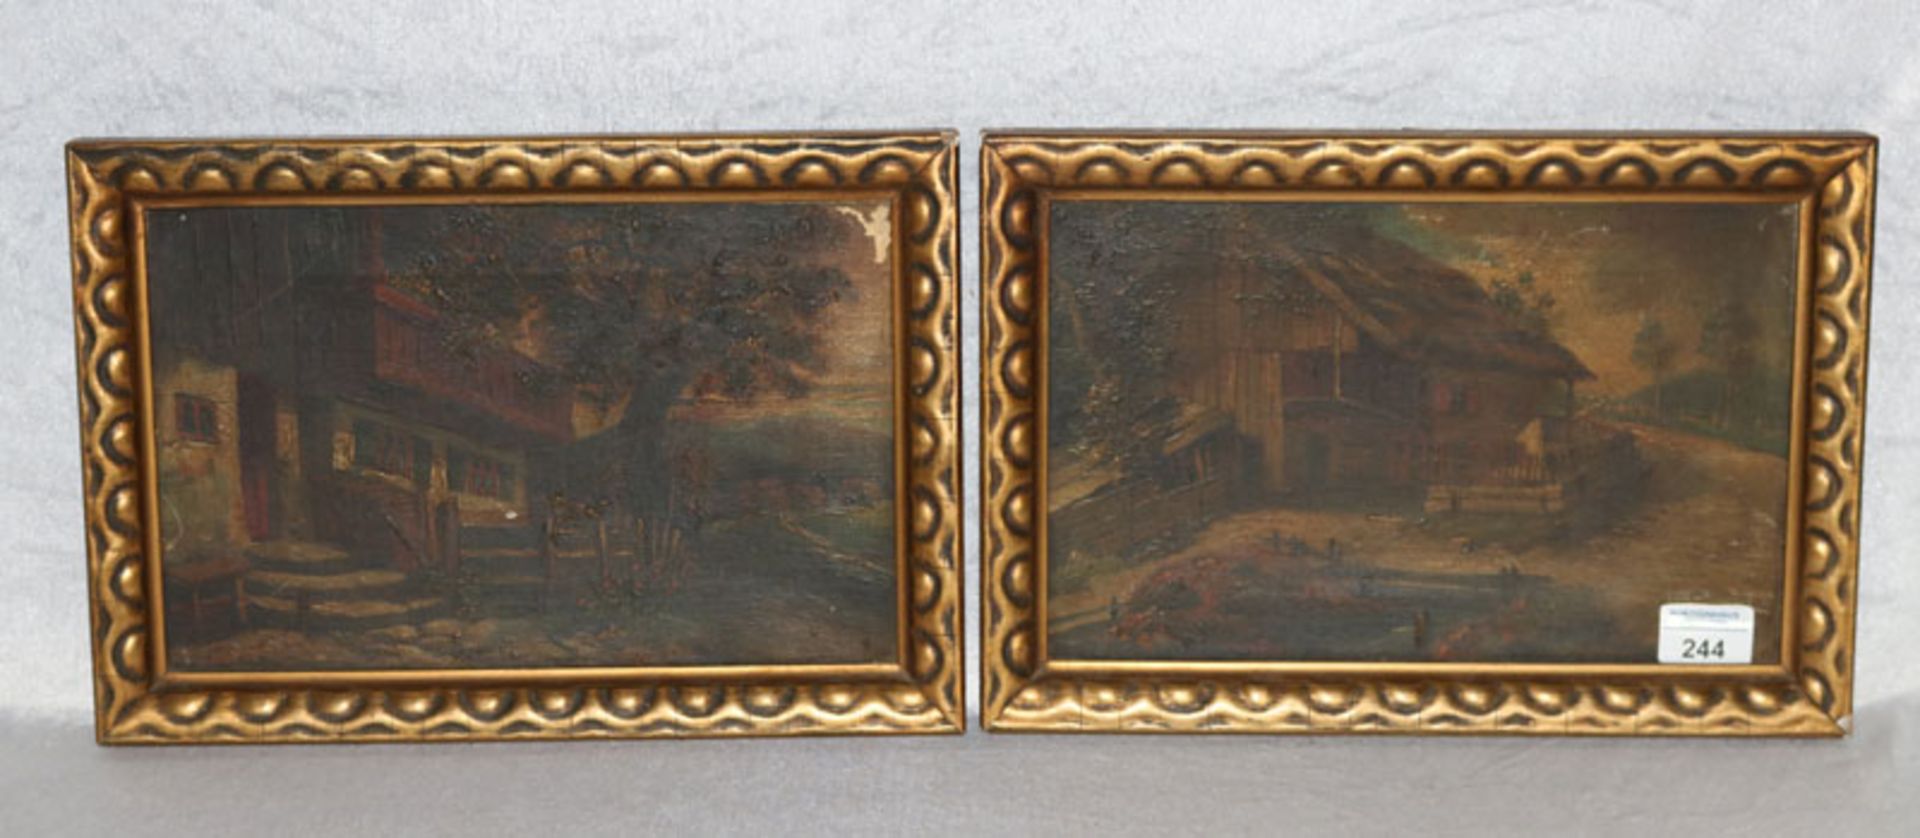 2 Gemälde ÖL/LW 'Bauernhöfe', gerahmt, LW und Rahmen beschädigt, incl. Rahmen 24 cm x 35 cm